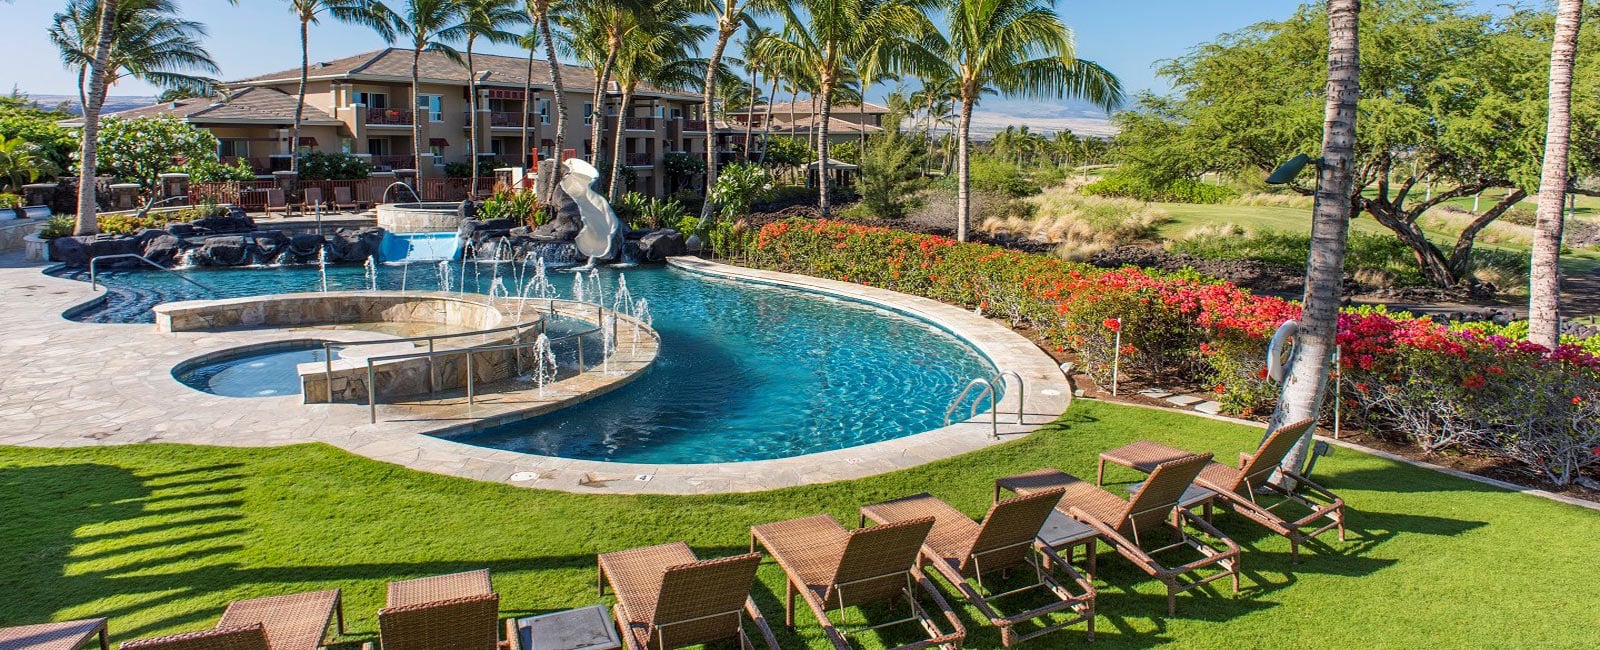 Pool Area of Kohala Suites in Waikoloa, Hawaii